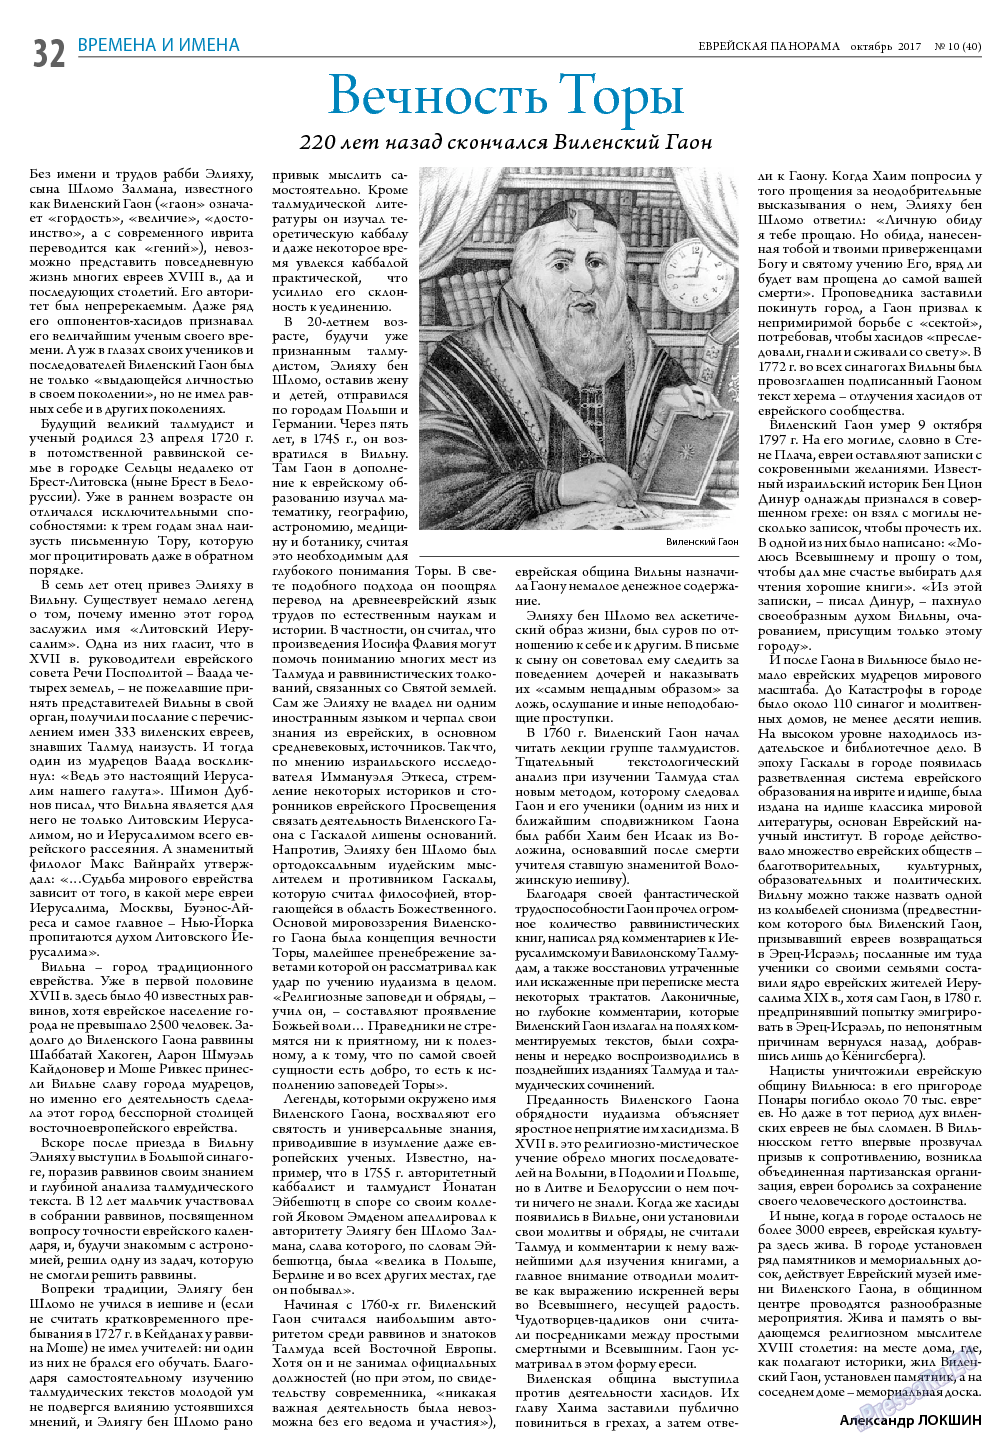 Еврейская панорама, газета. 2017 №10 стр.32